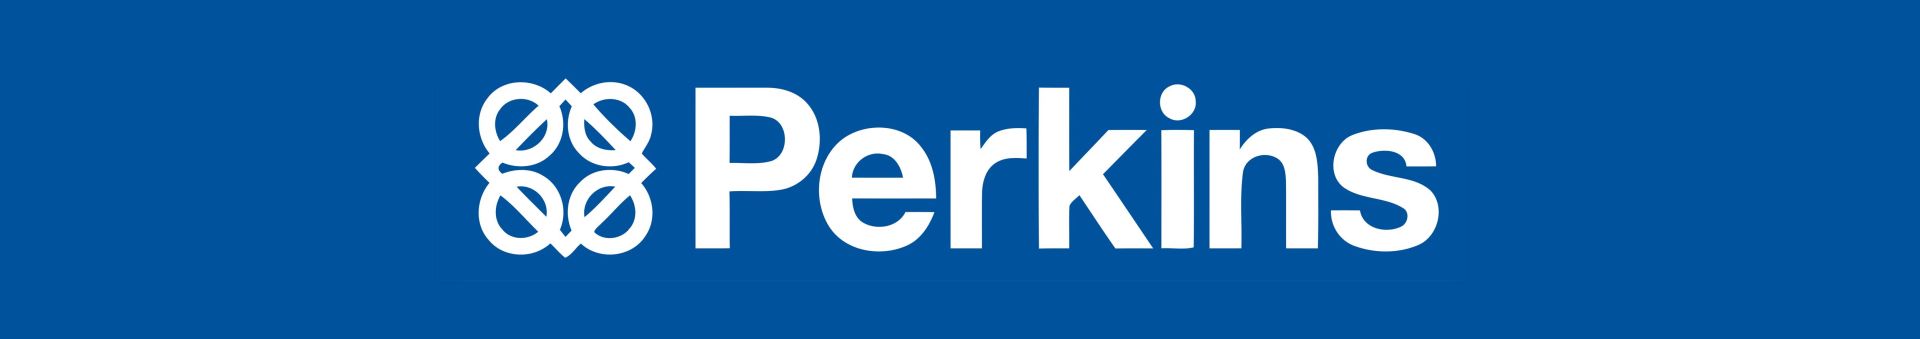 Perkins_Logo_small-883b4d72